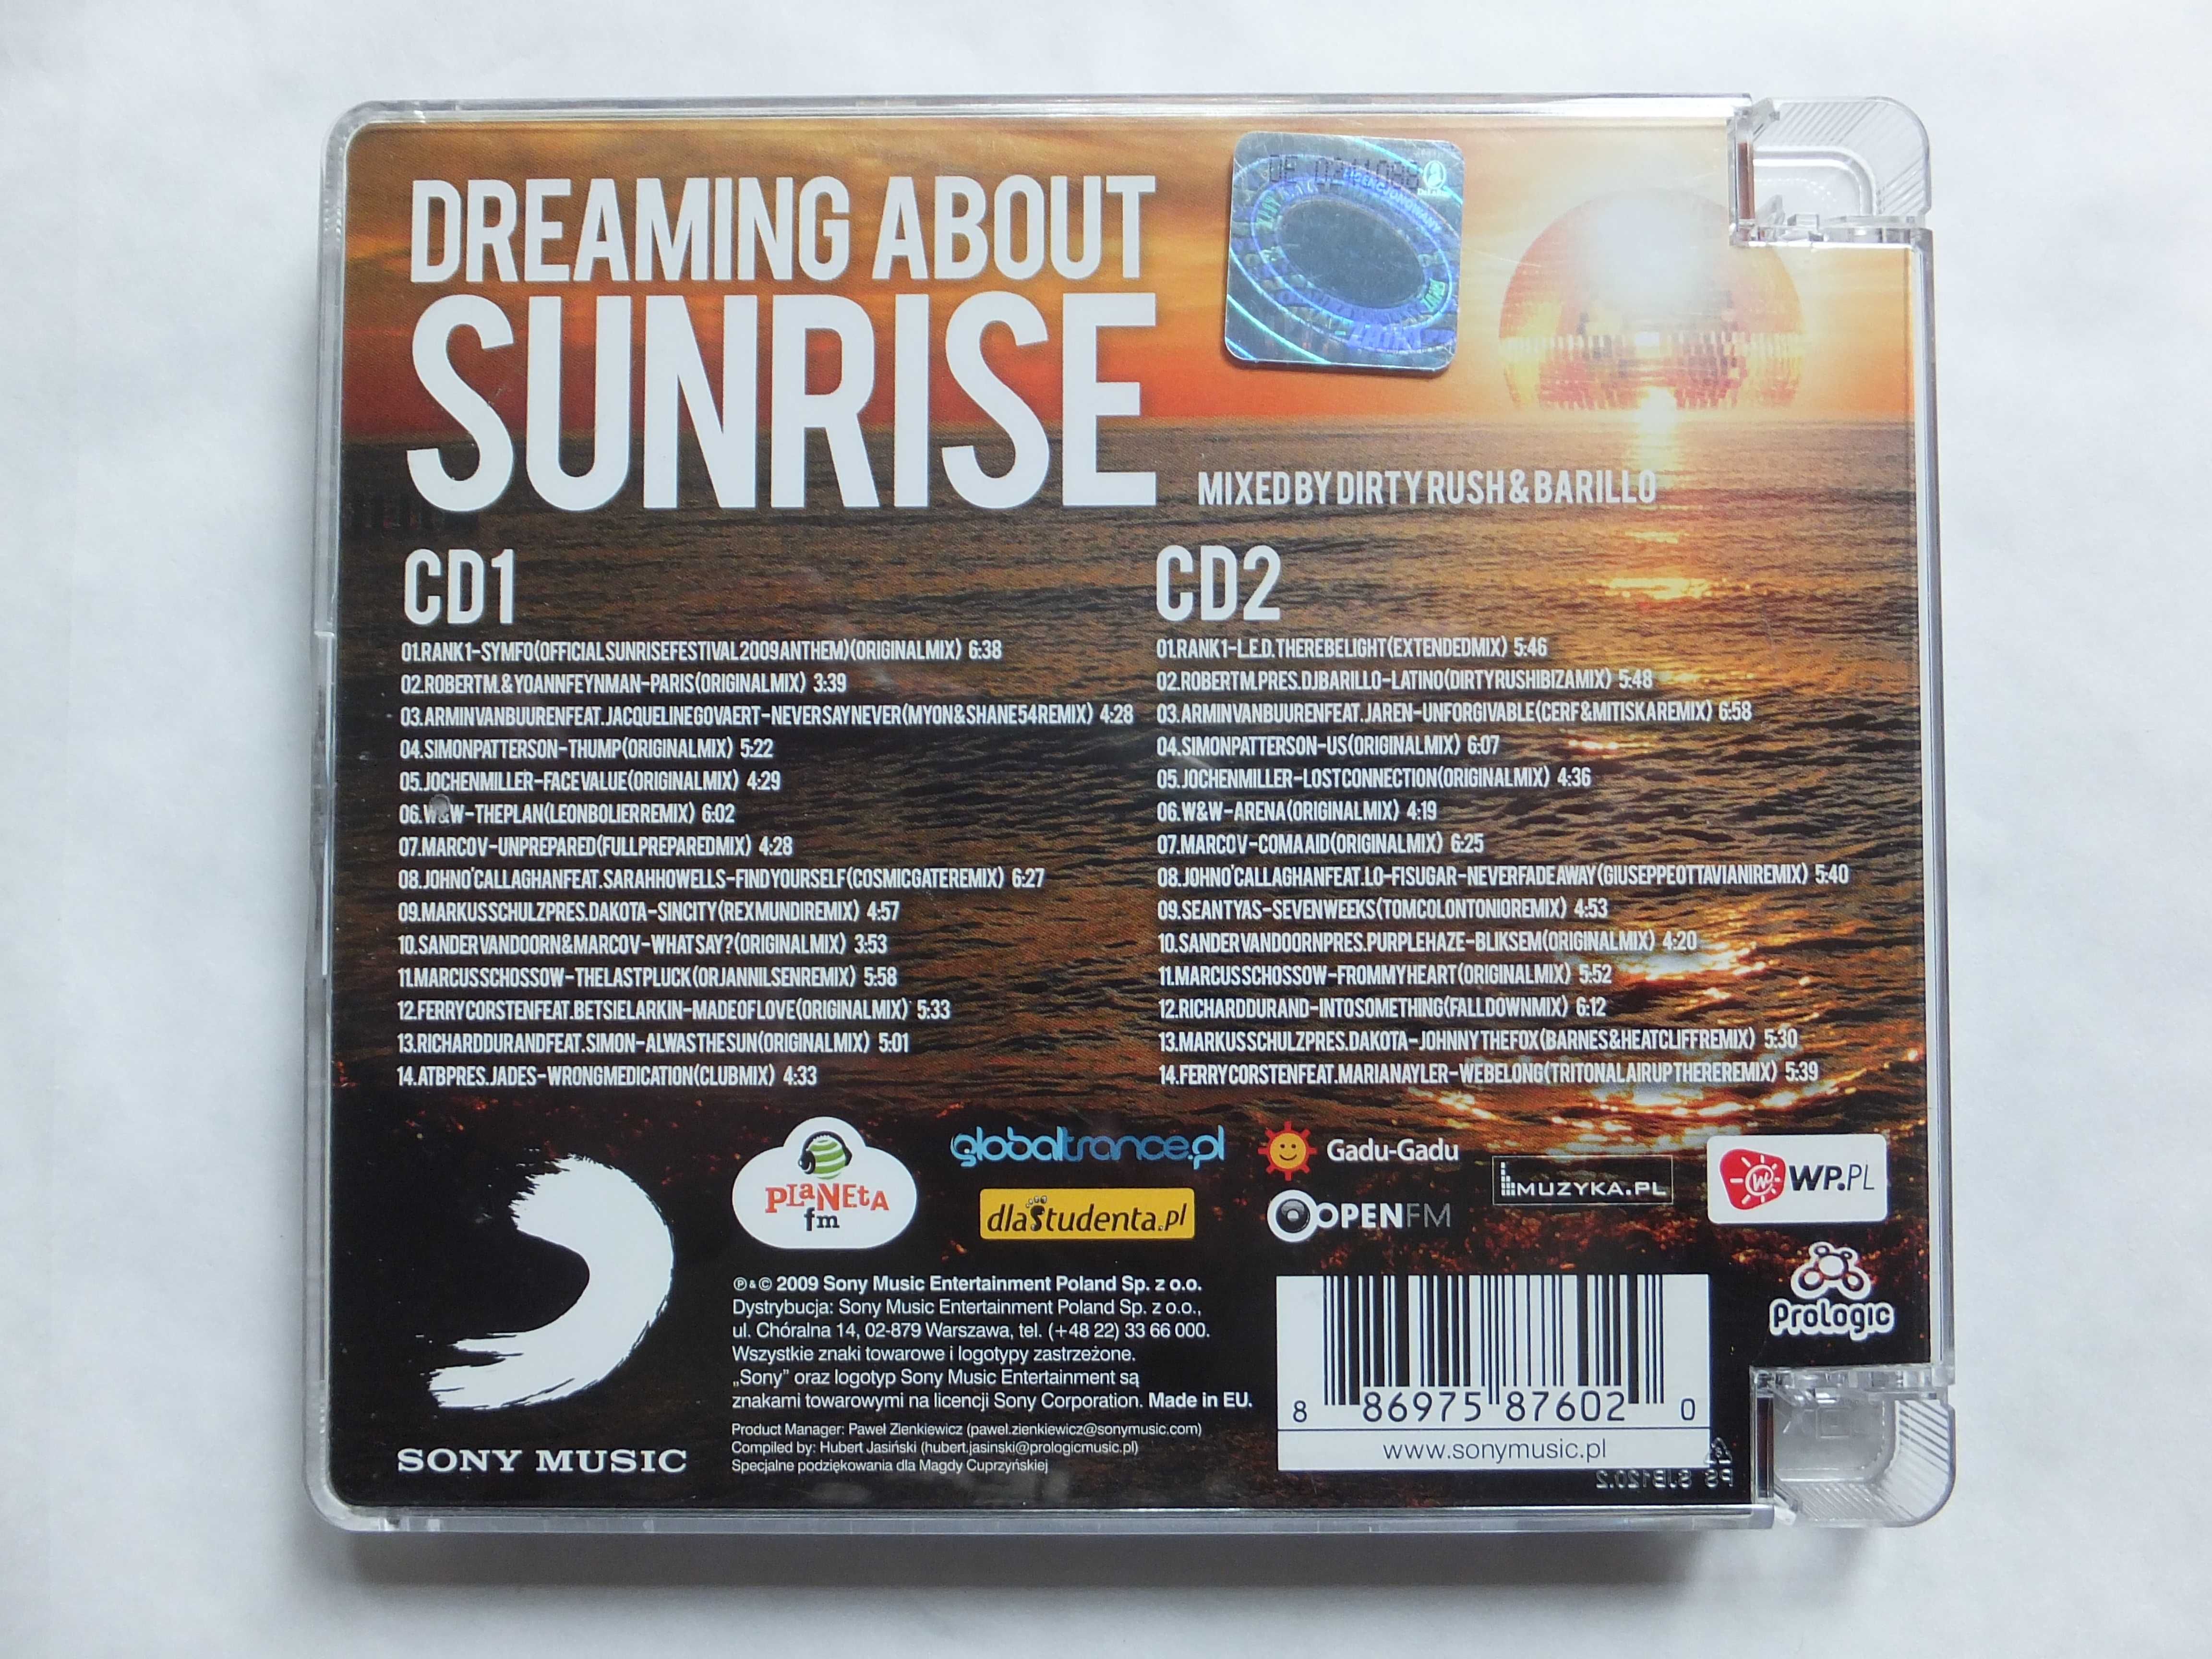 Sunrise festival - Dreaming about sunrise 2009